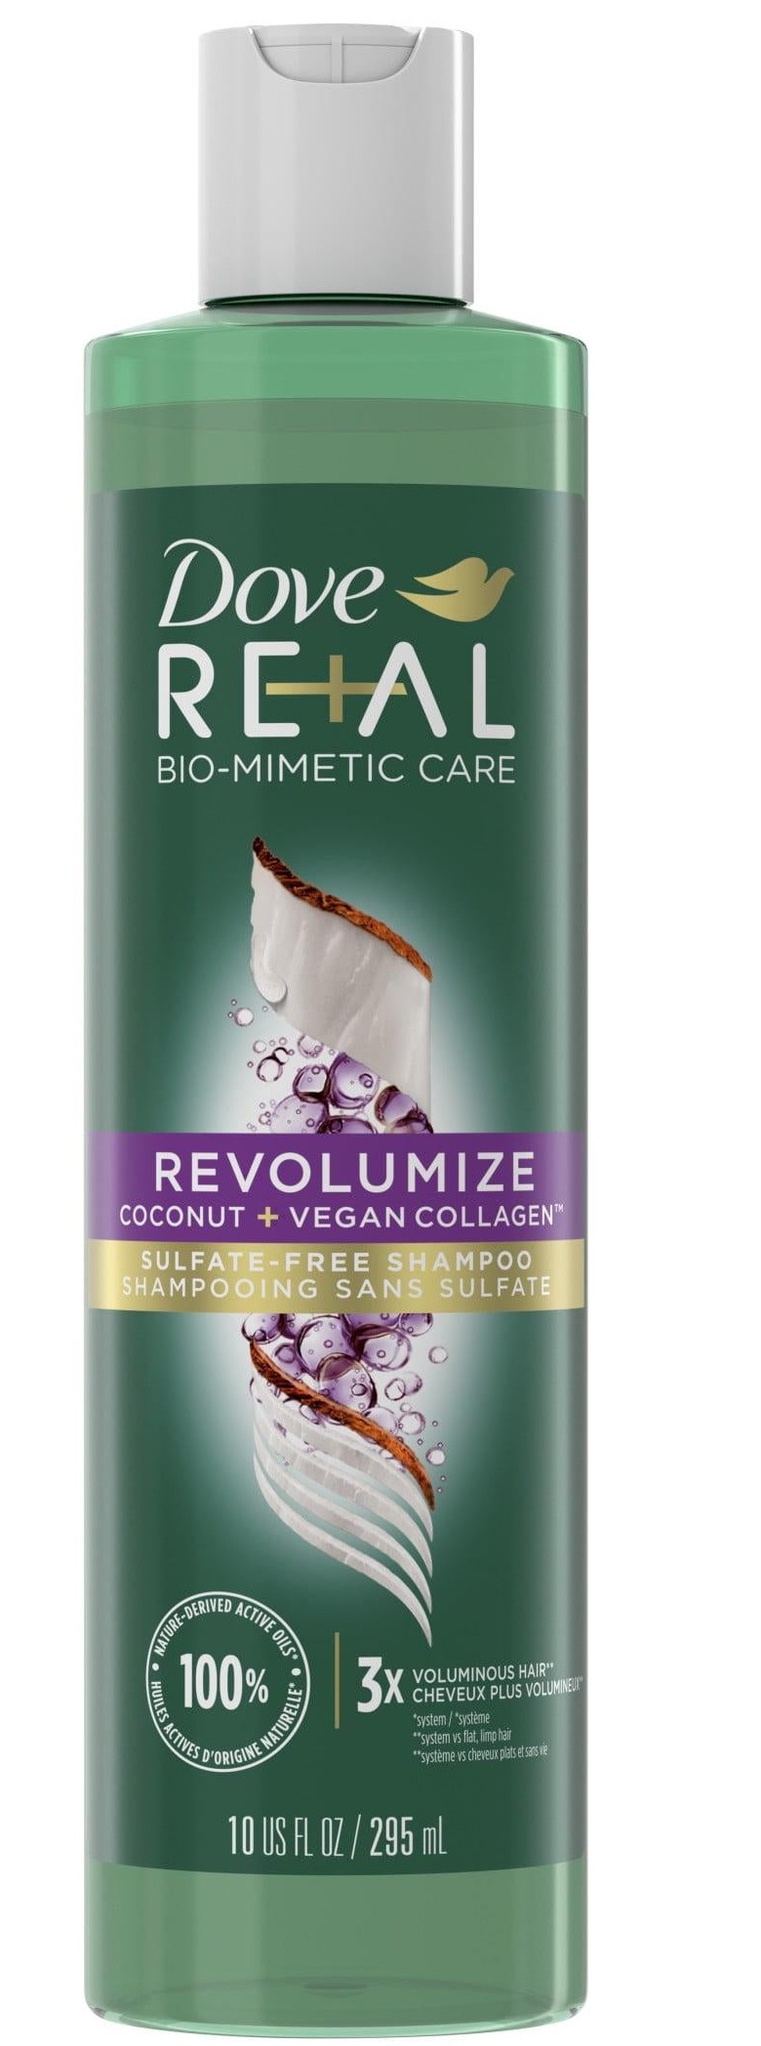 Dove Real Biomimetic Care Daily Shampoo